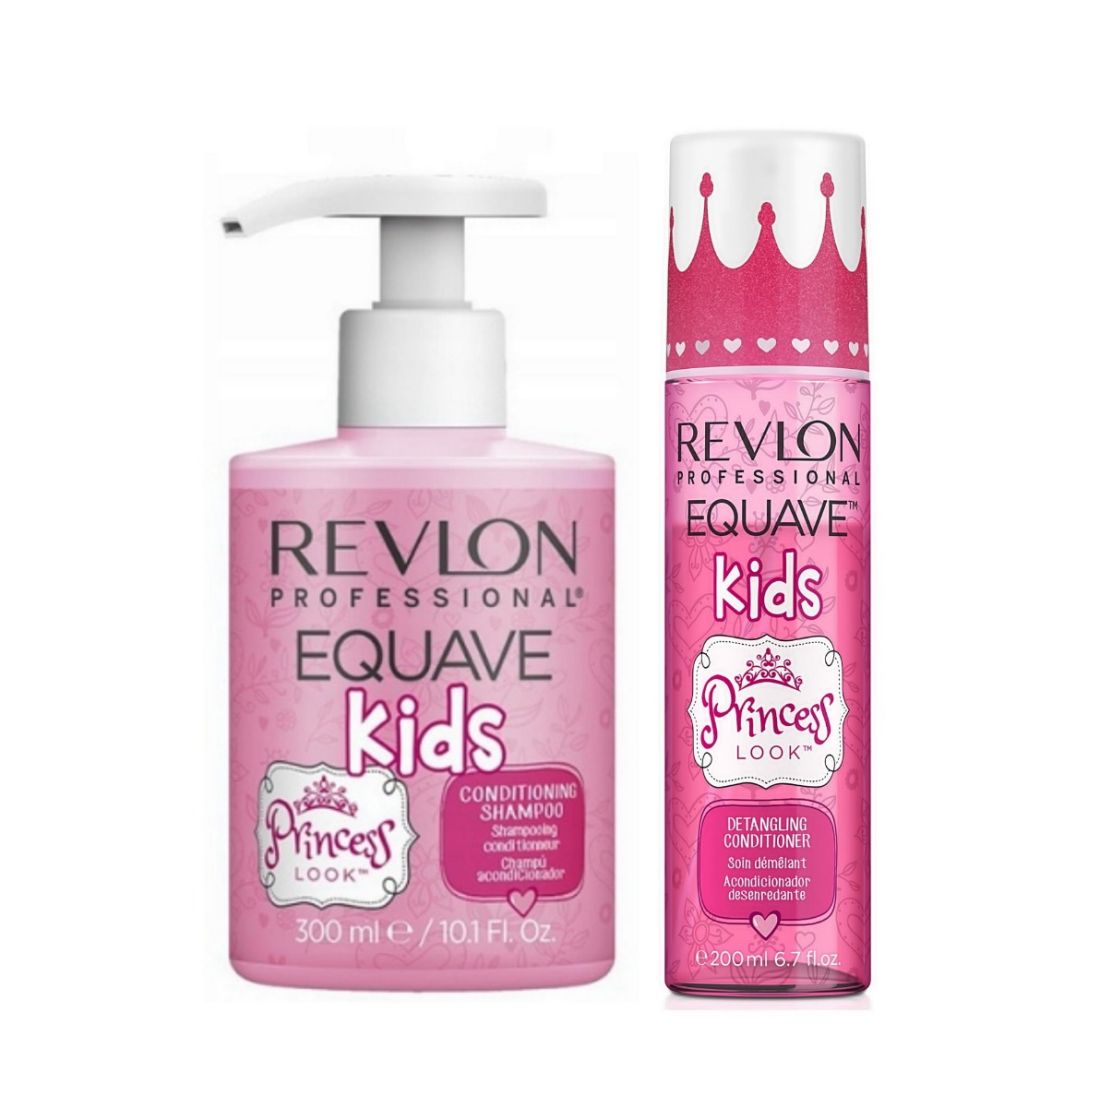 Revlon Professional Equave Kids Princess Look Detangling Conditioner 200ml & Shampoo 300ml Set